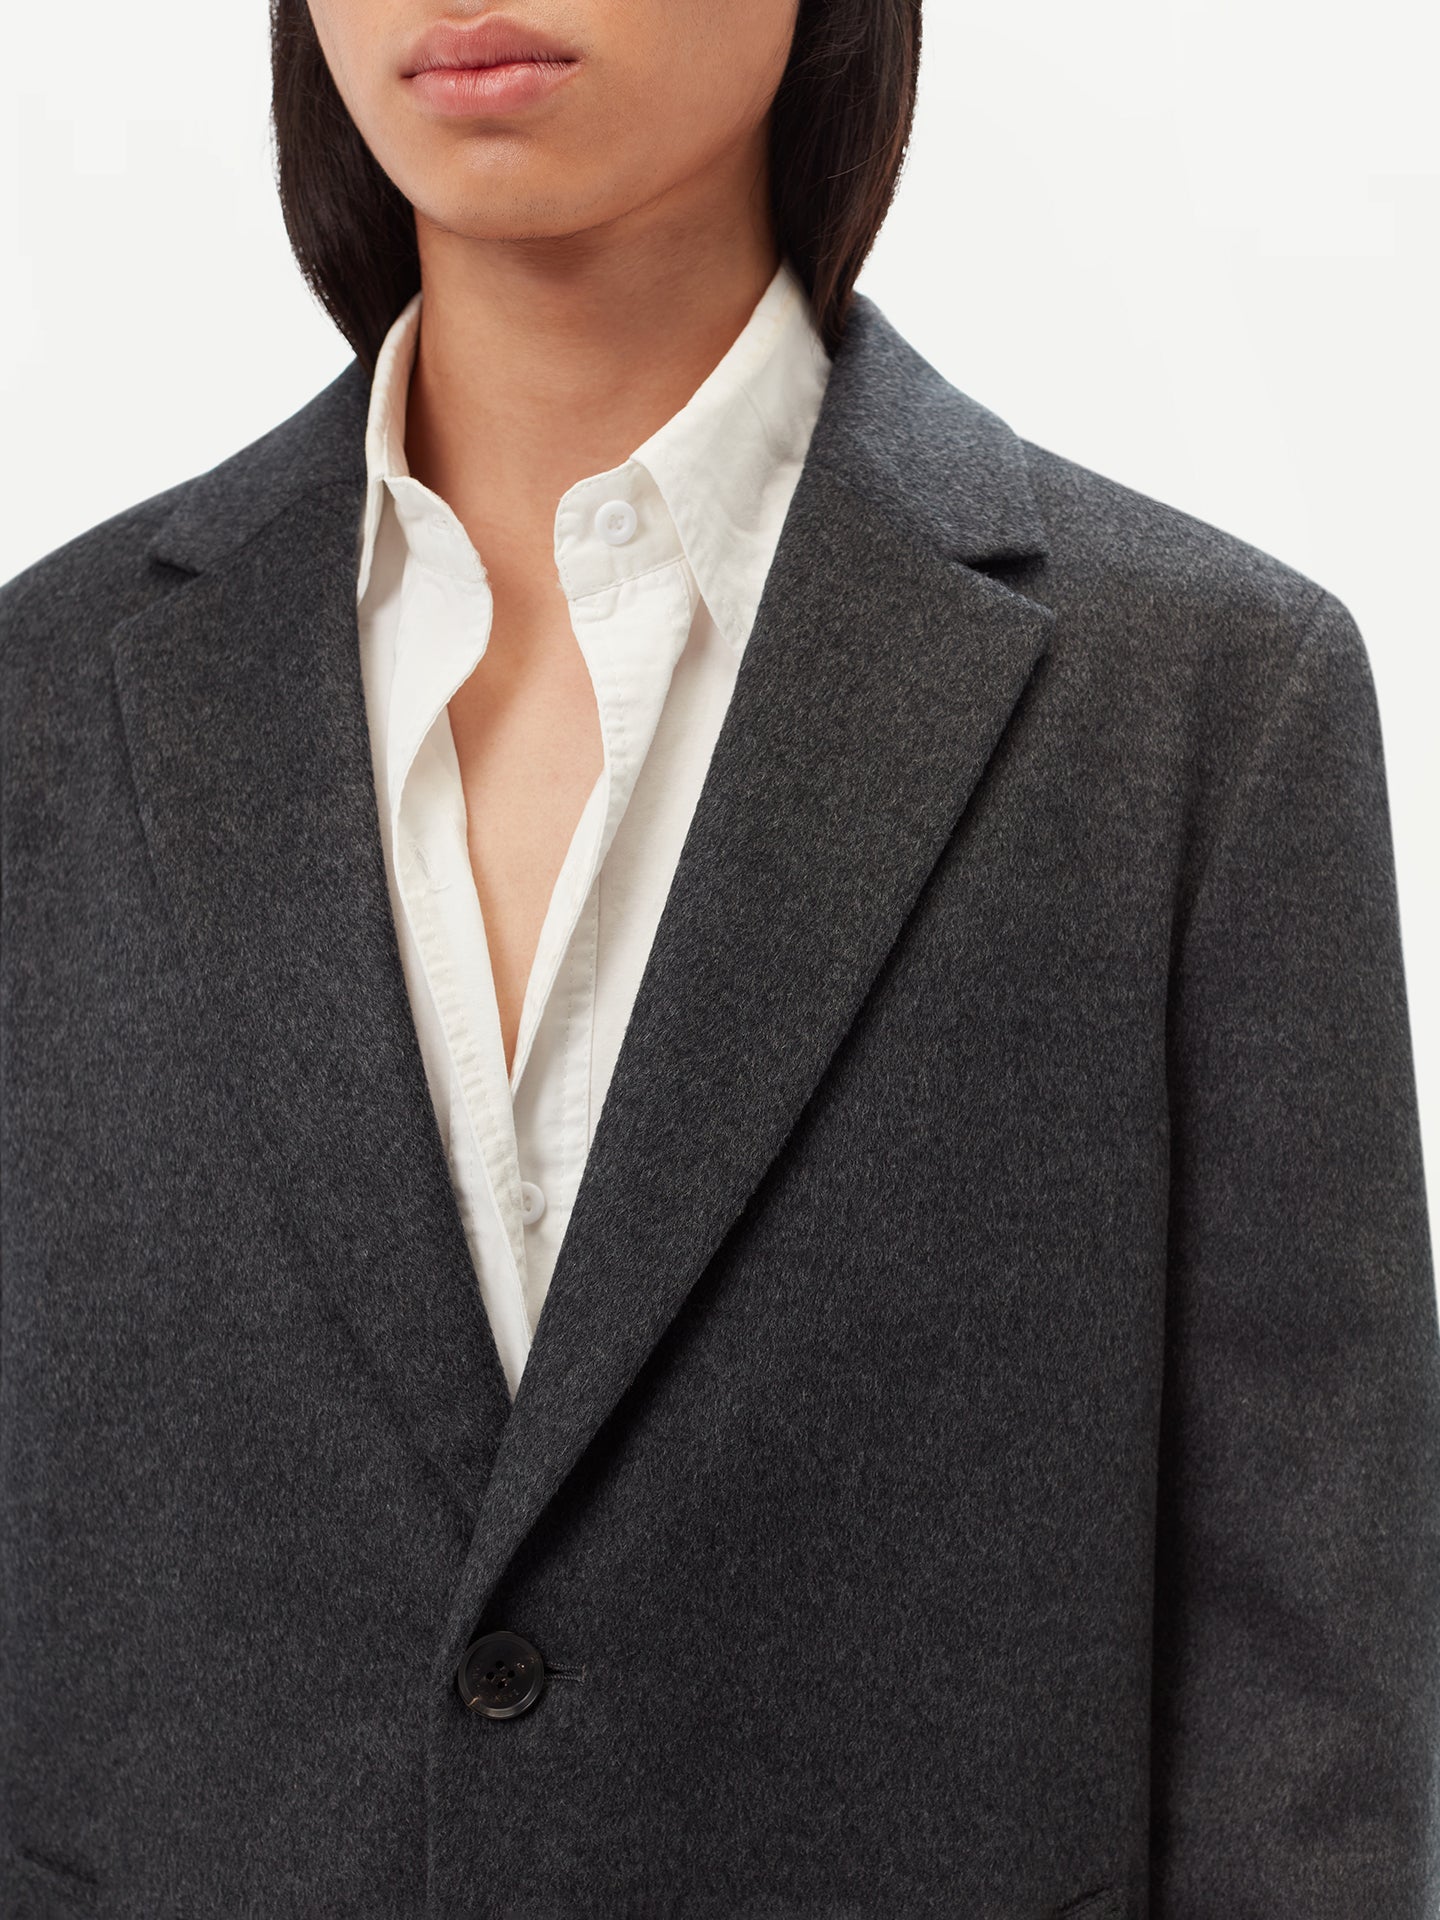 GOBI Men’s Cashmere Coat - Giorgio Spina Collection